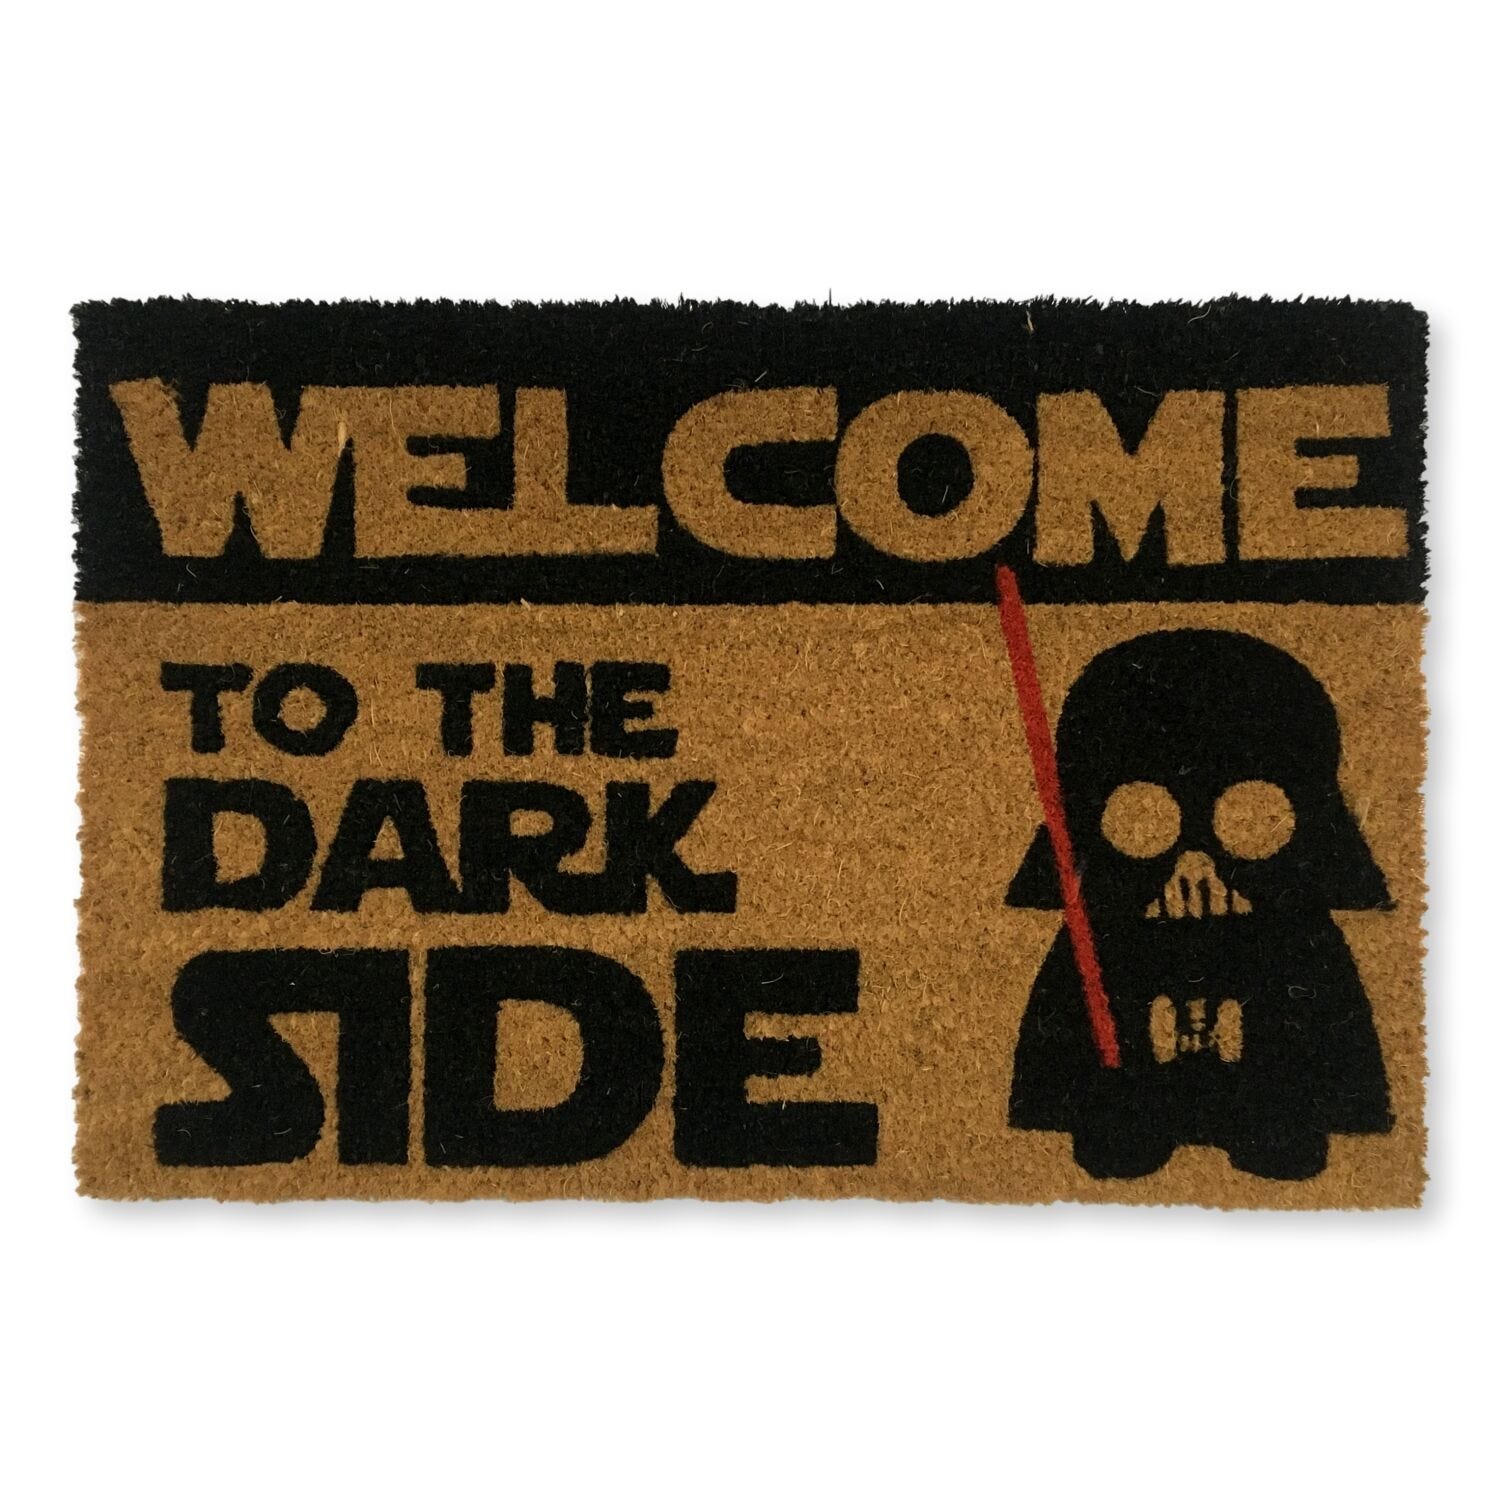 Star Wars - Felpudo Welcome To The Dark Side